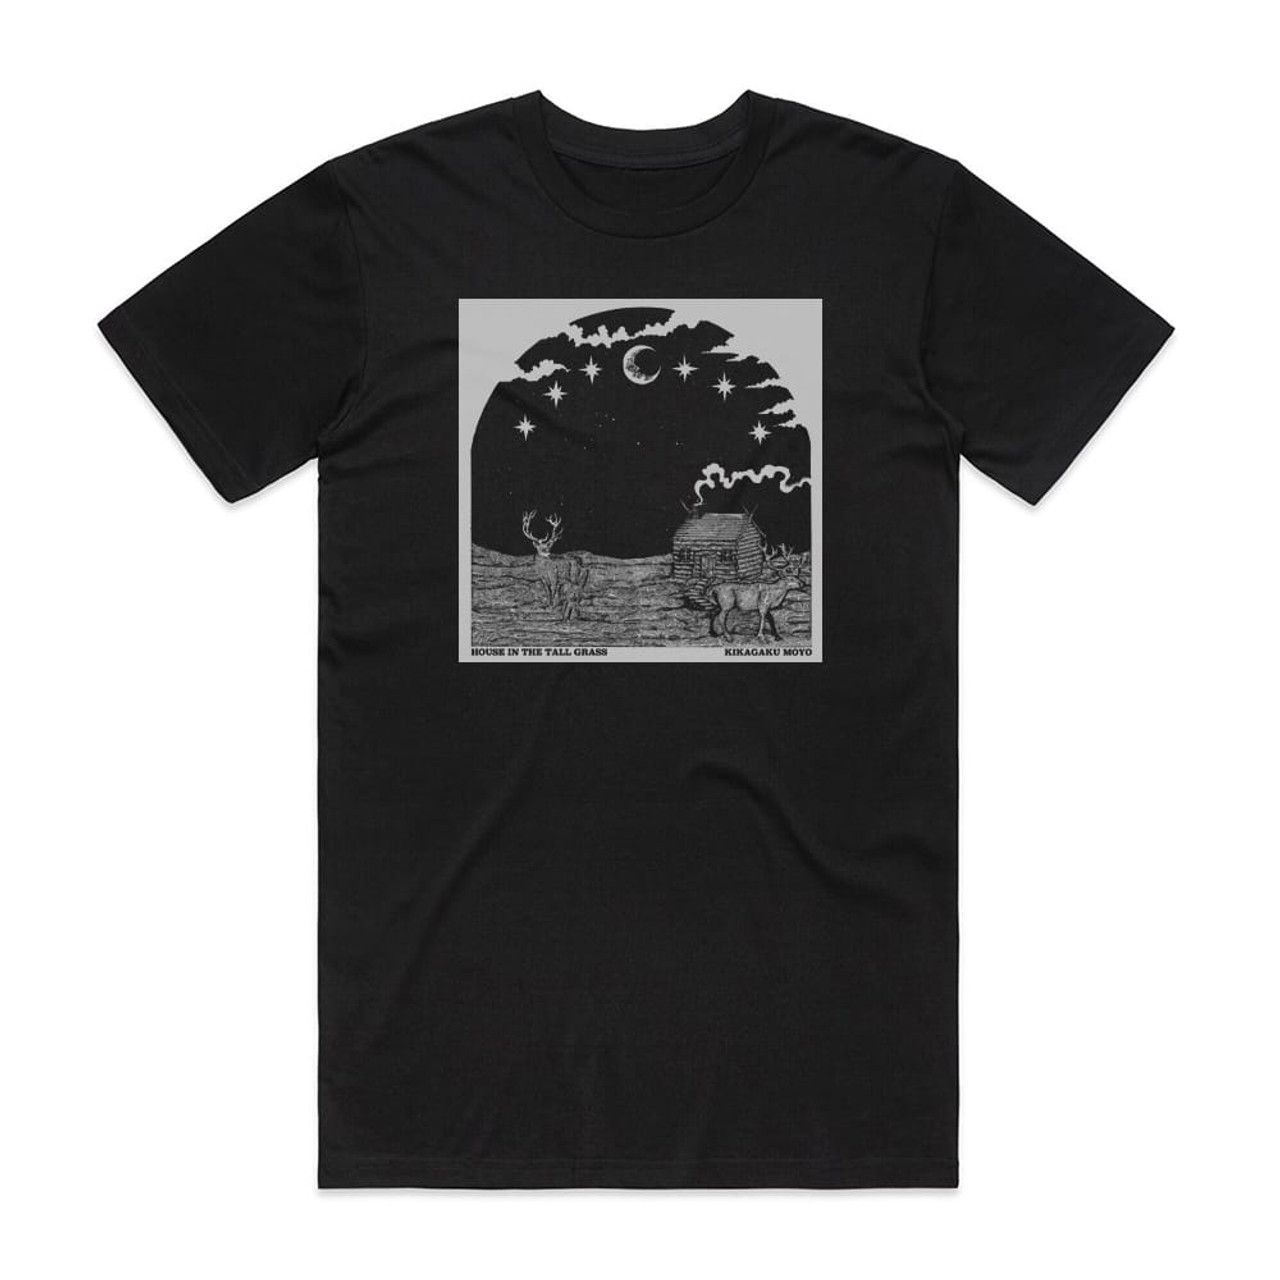 Kikagaku Moyo House In The Tall Grass Album Cover T-Shirt Black